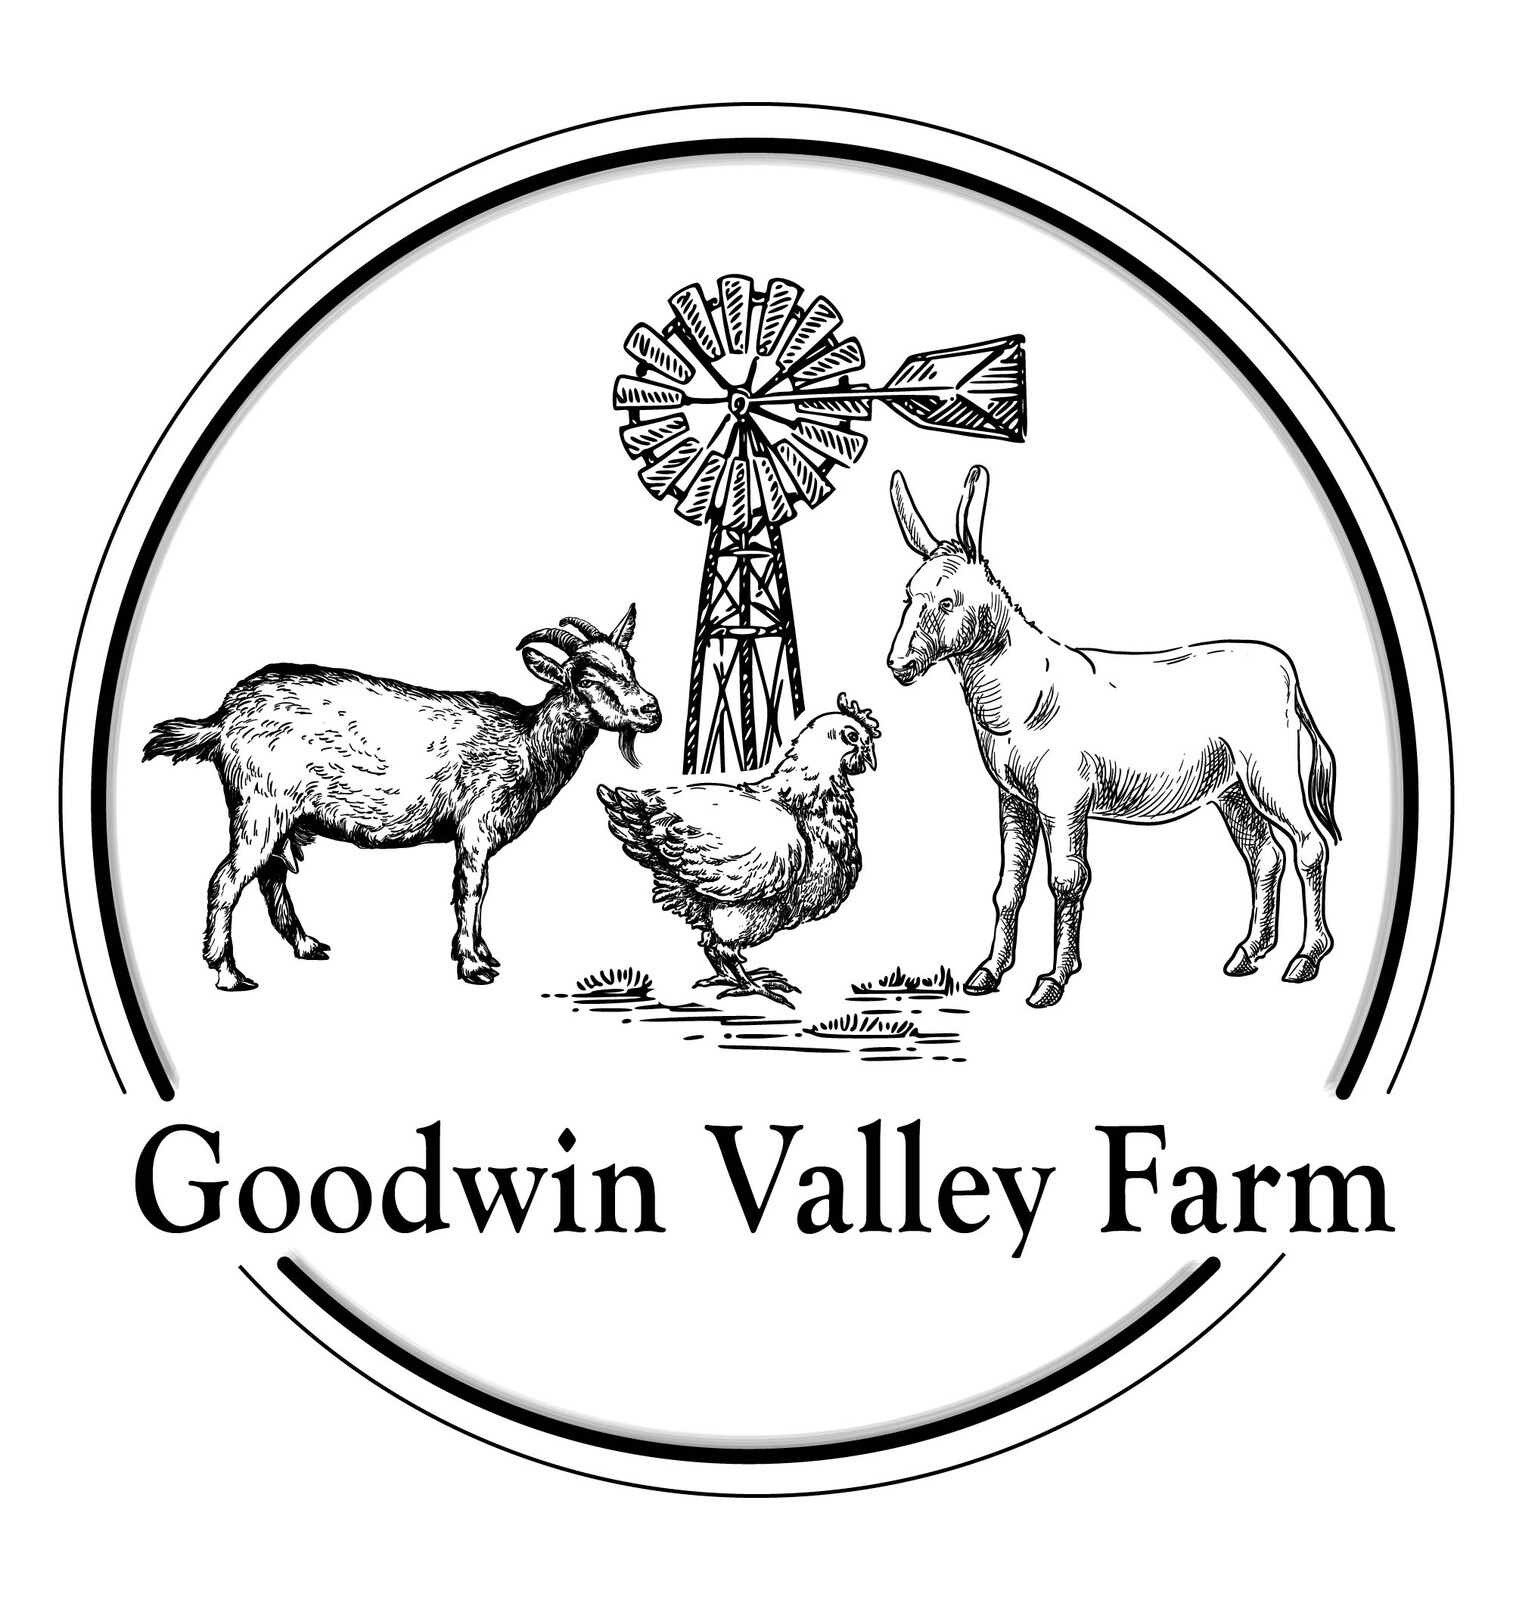 Goodwin Valley Farm - Adobe Illustrator